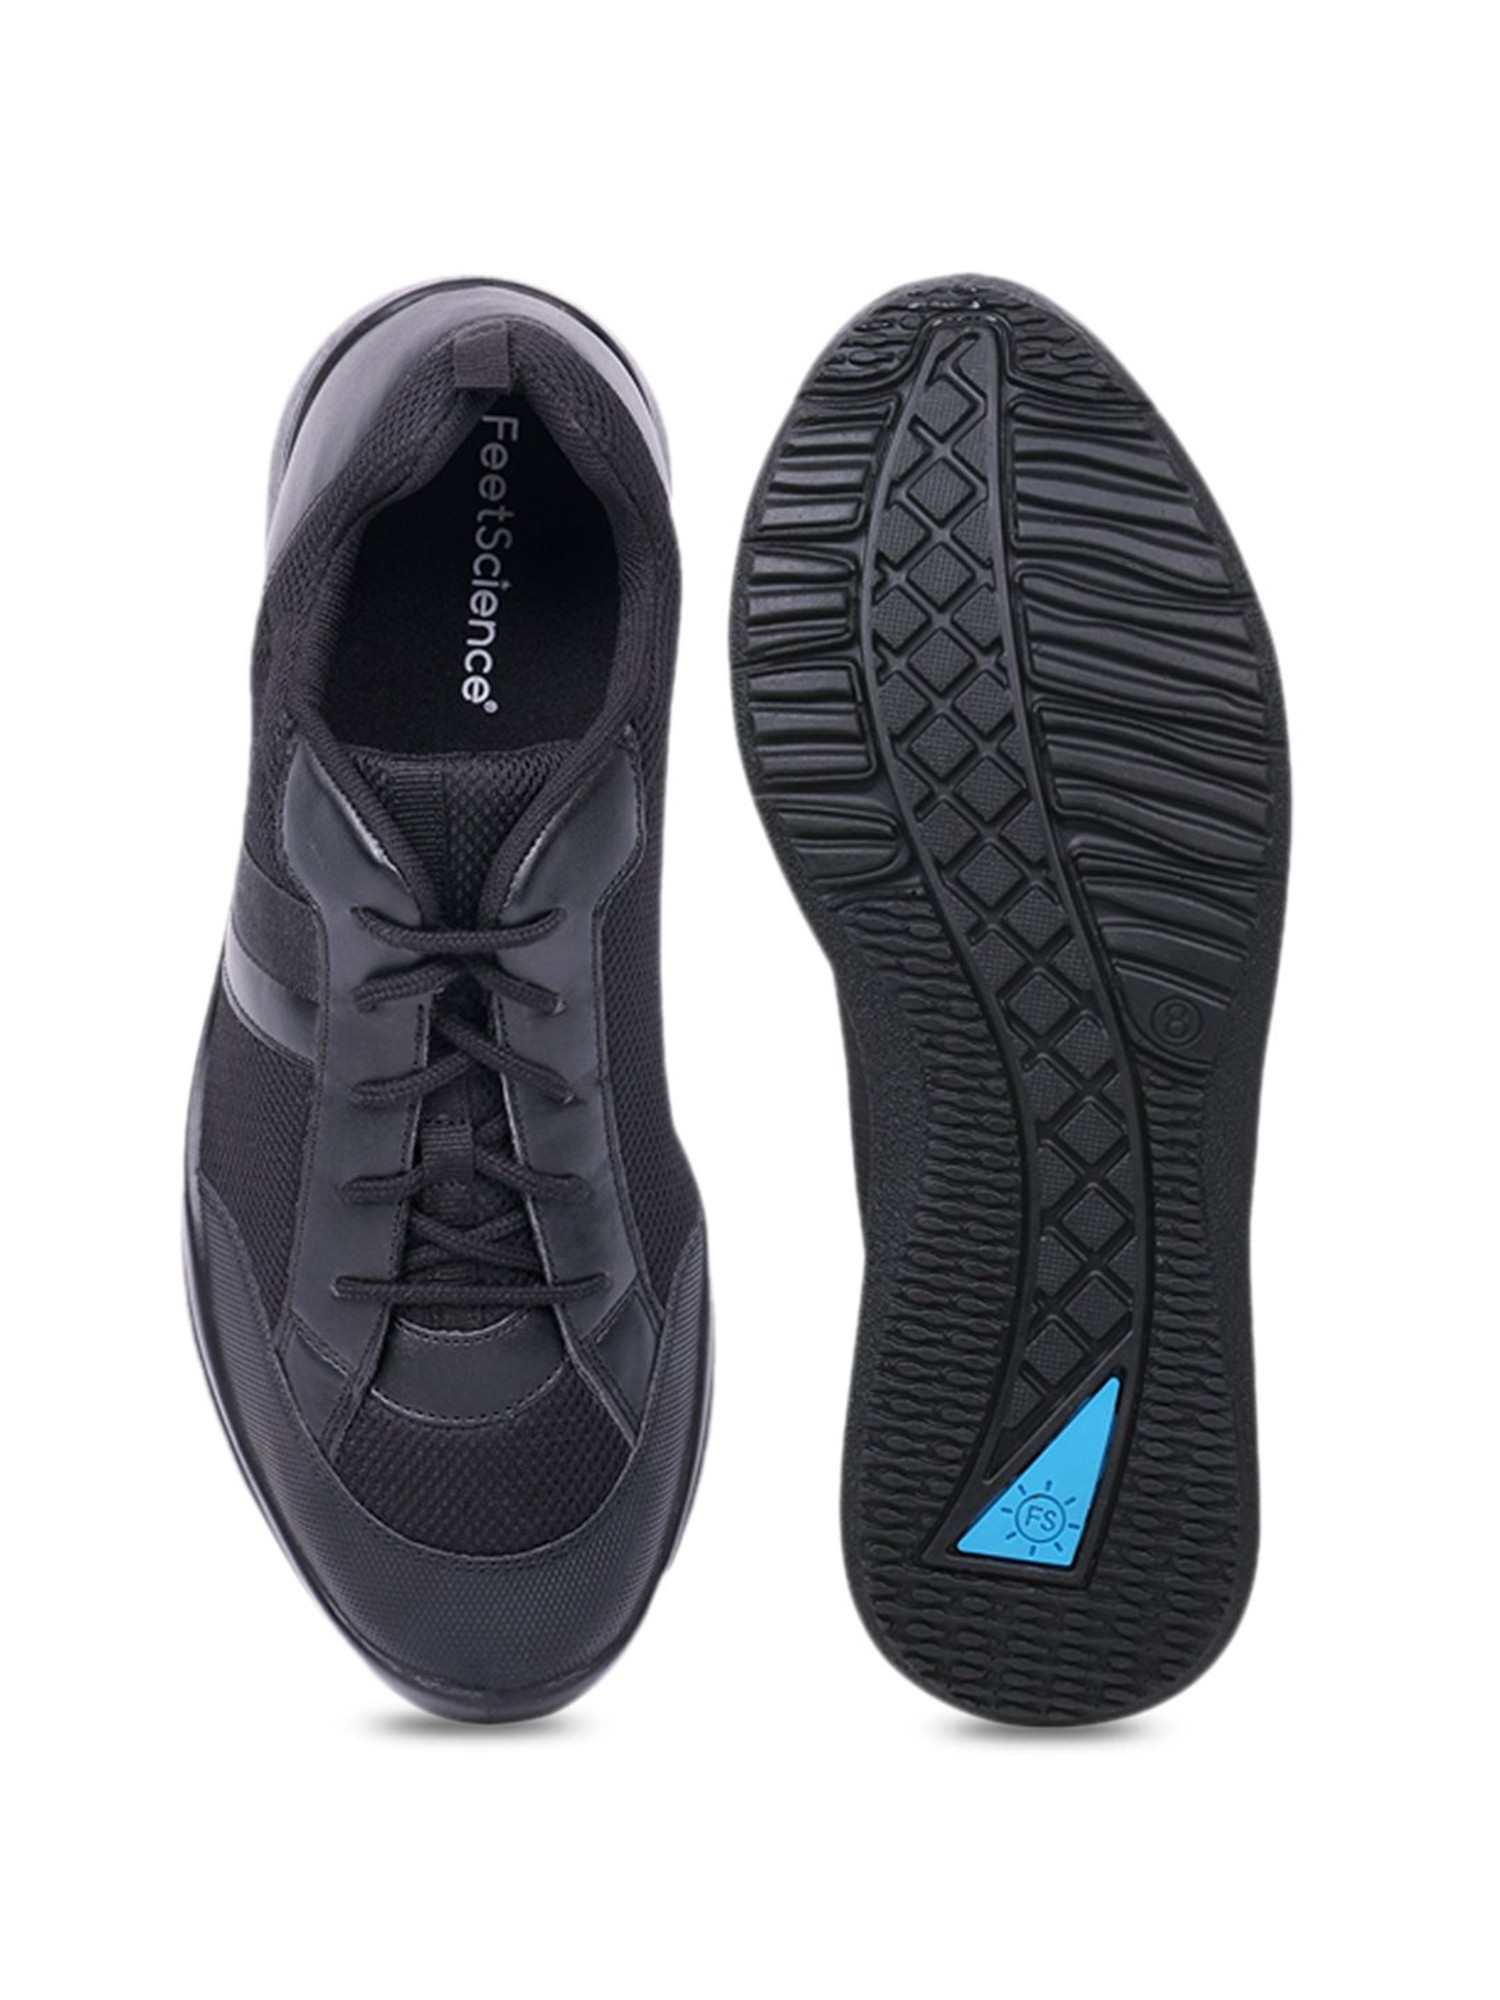 Buy Shoes for Men Online | Performance Footwear by Tagra